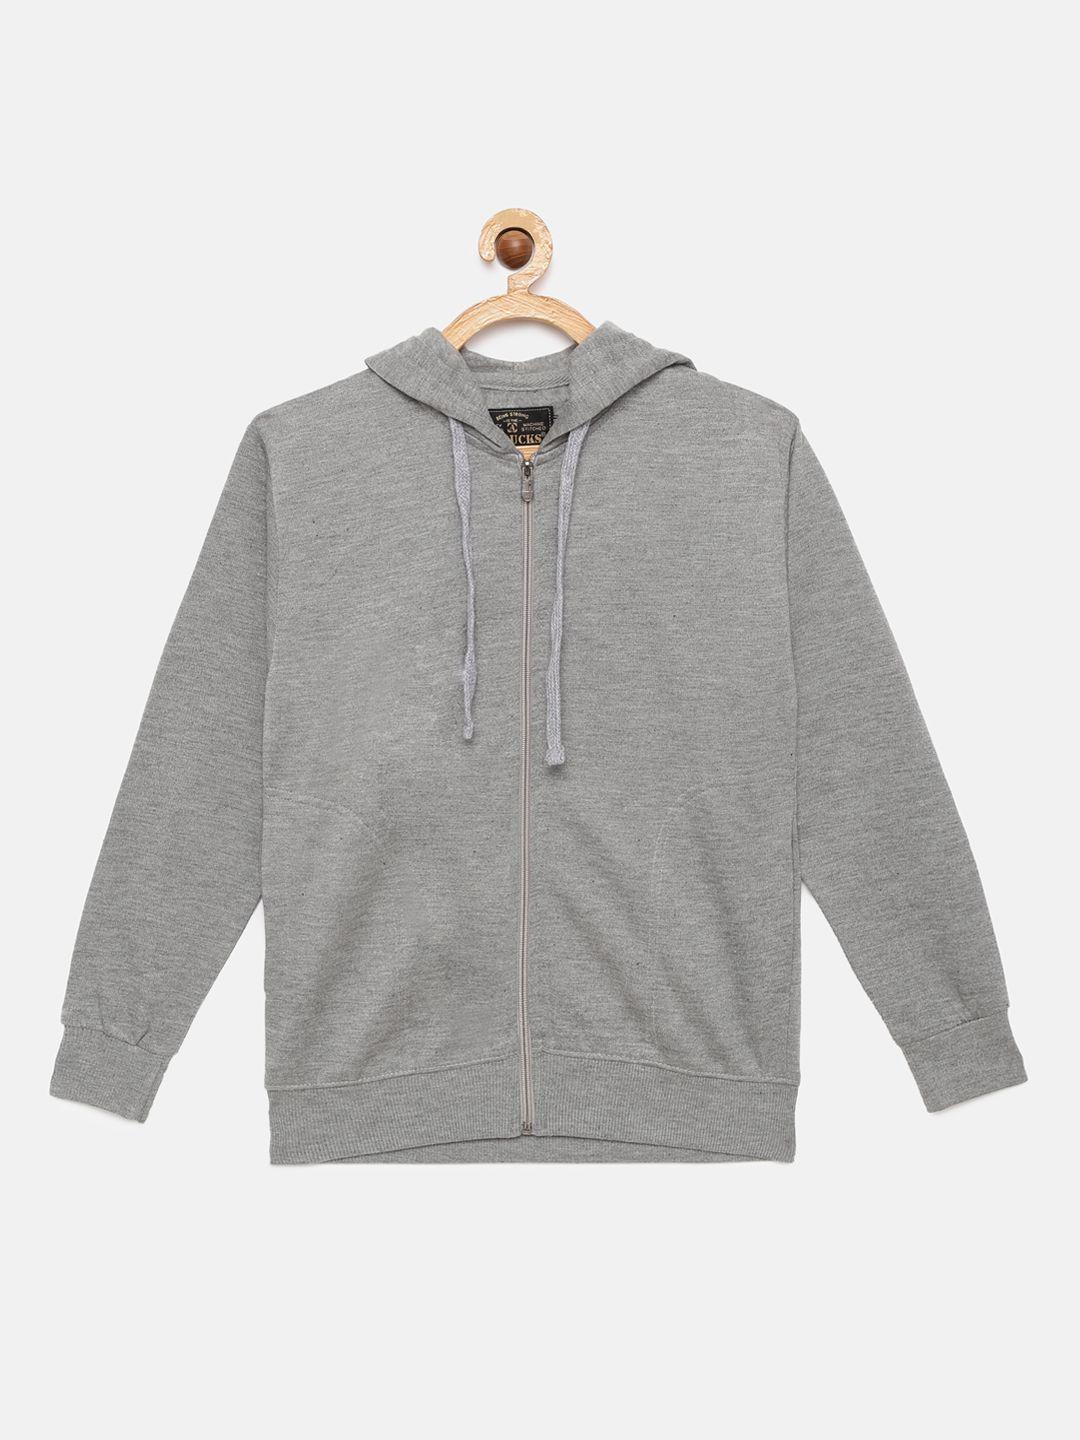 adbucks-boys-grey-solid-pure-cotton-hooded-sweatshirt